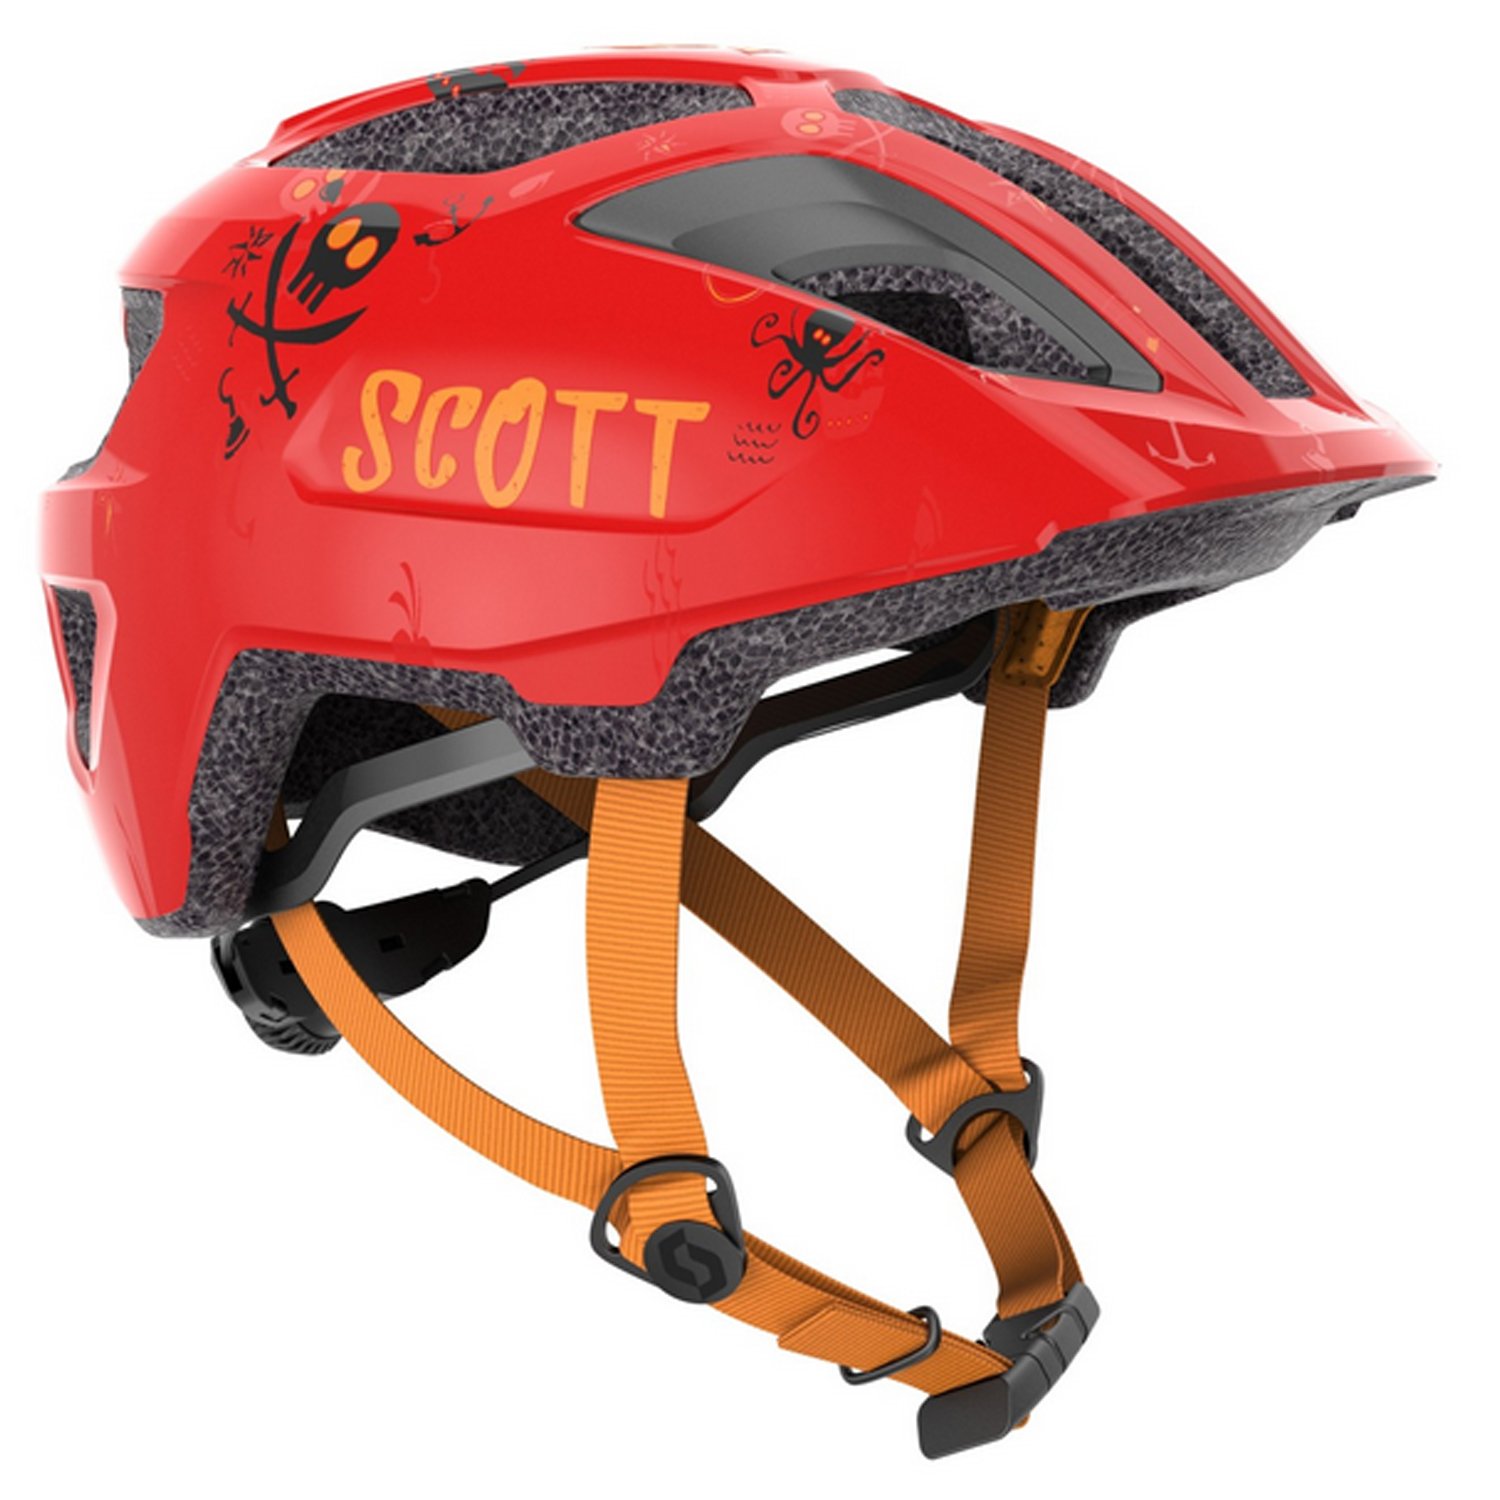 Велошлем SCOTT Spunto Kid (CE), детский, florida red, ES275235-6909 шлем велосипедный scott spunto kid red orange onesize 50 56 см 2019 270115 1045